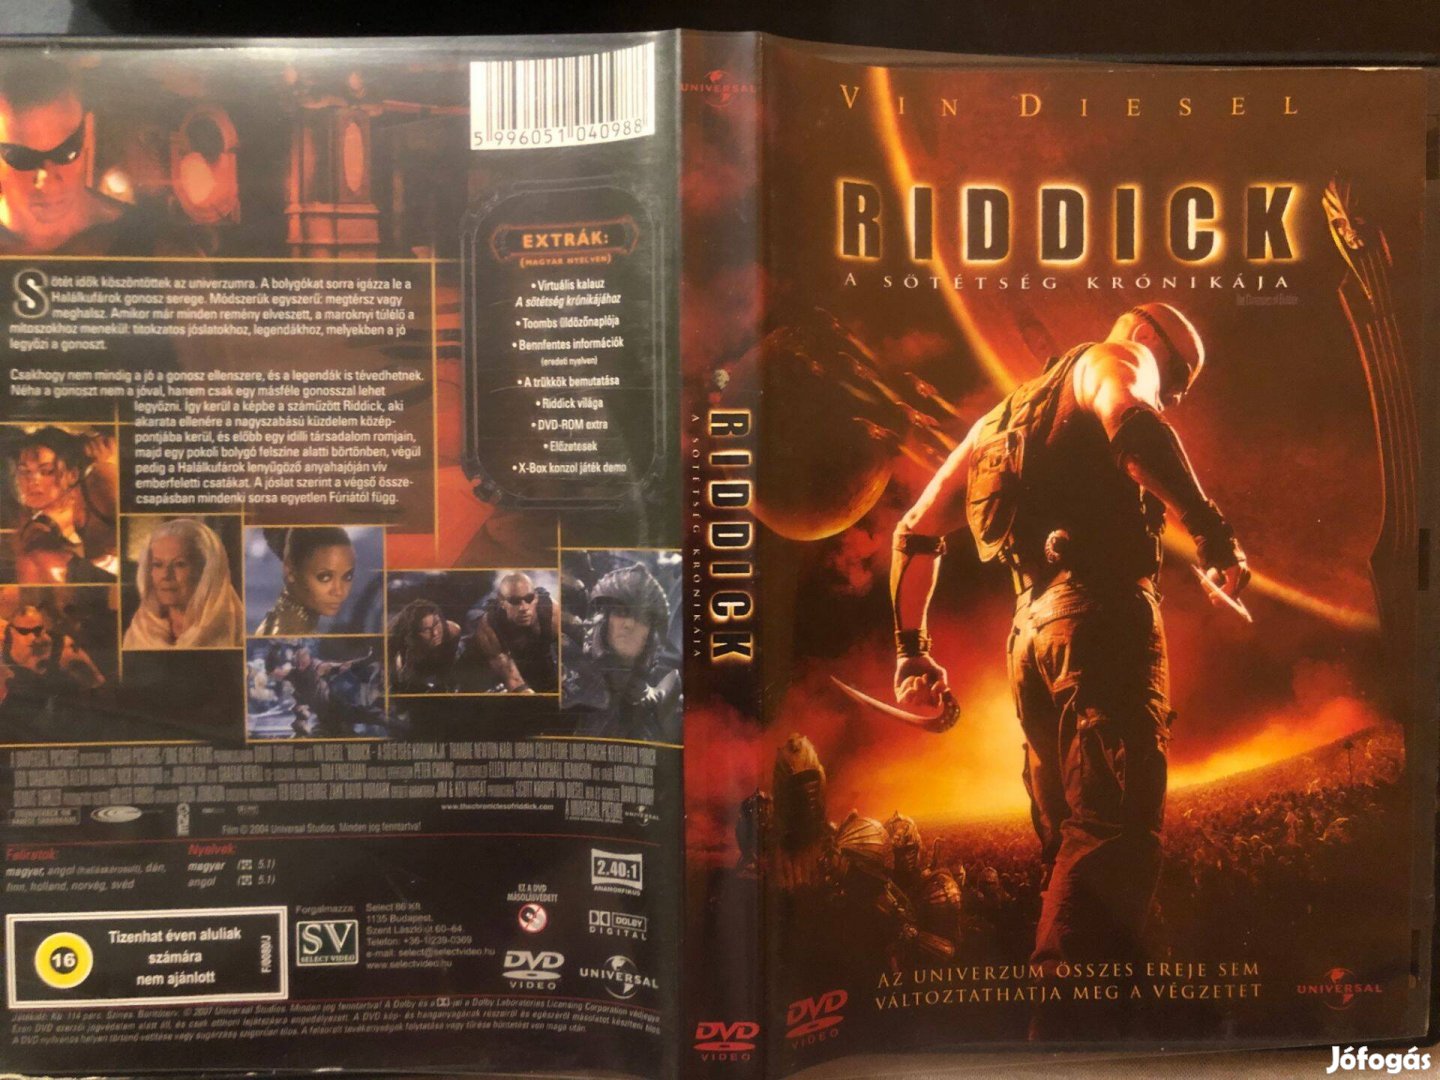 Riddick A sötétség krónikája (karcmentes, Vin Diesel) DVD